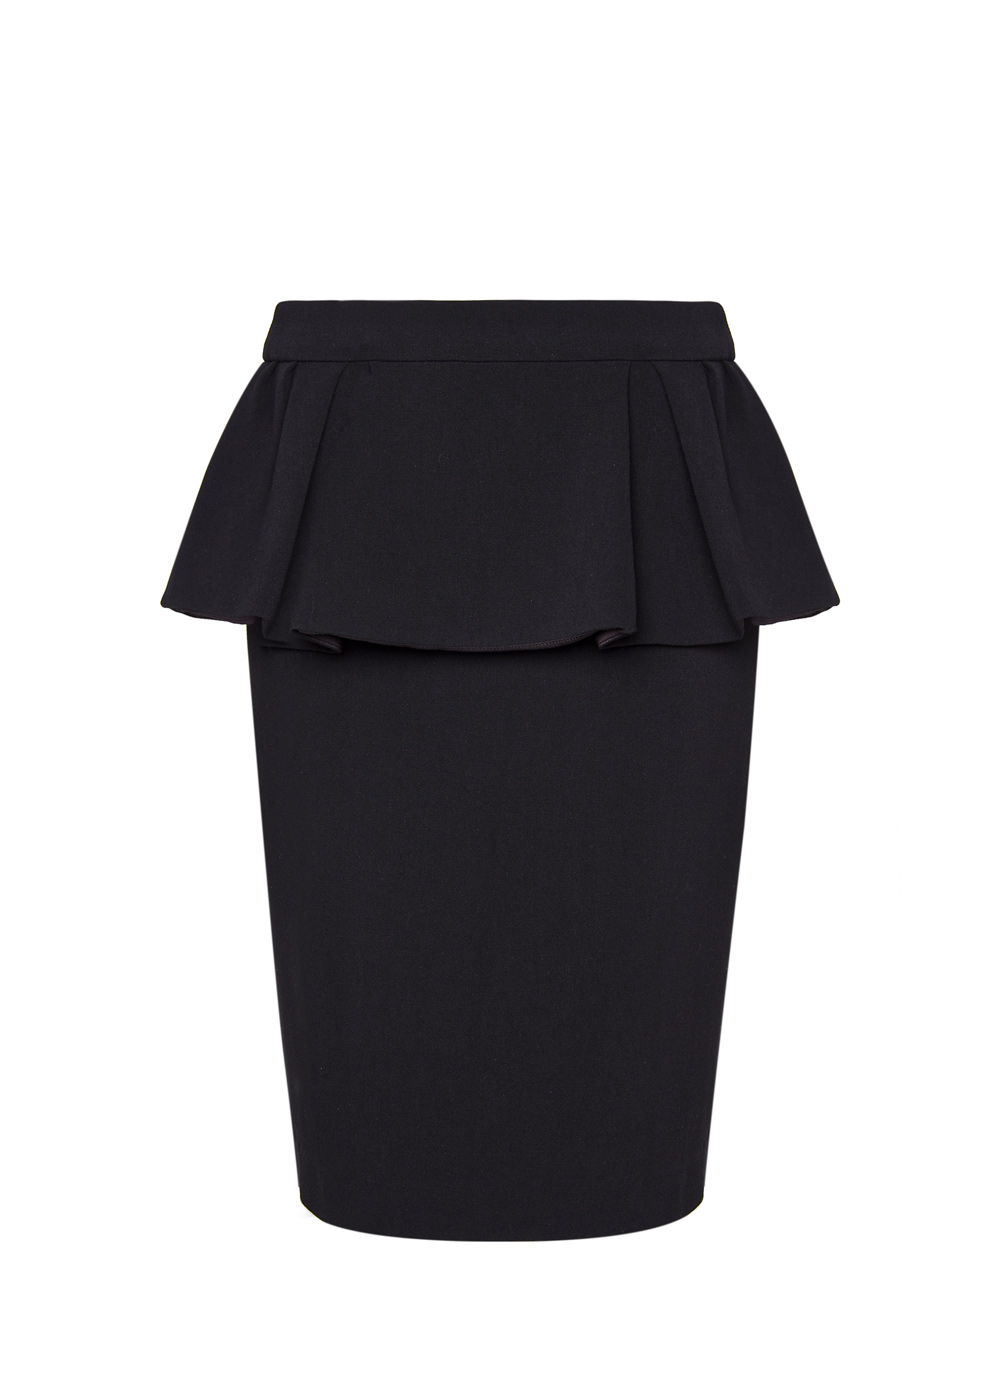 Mango Peplum Skirt in 02 (Black) - Lyst